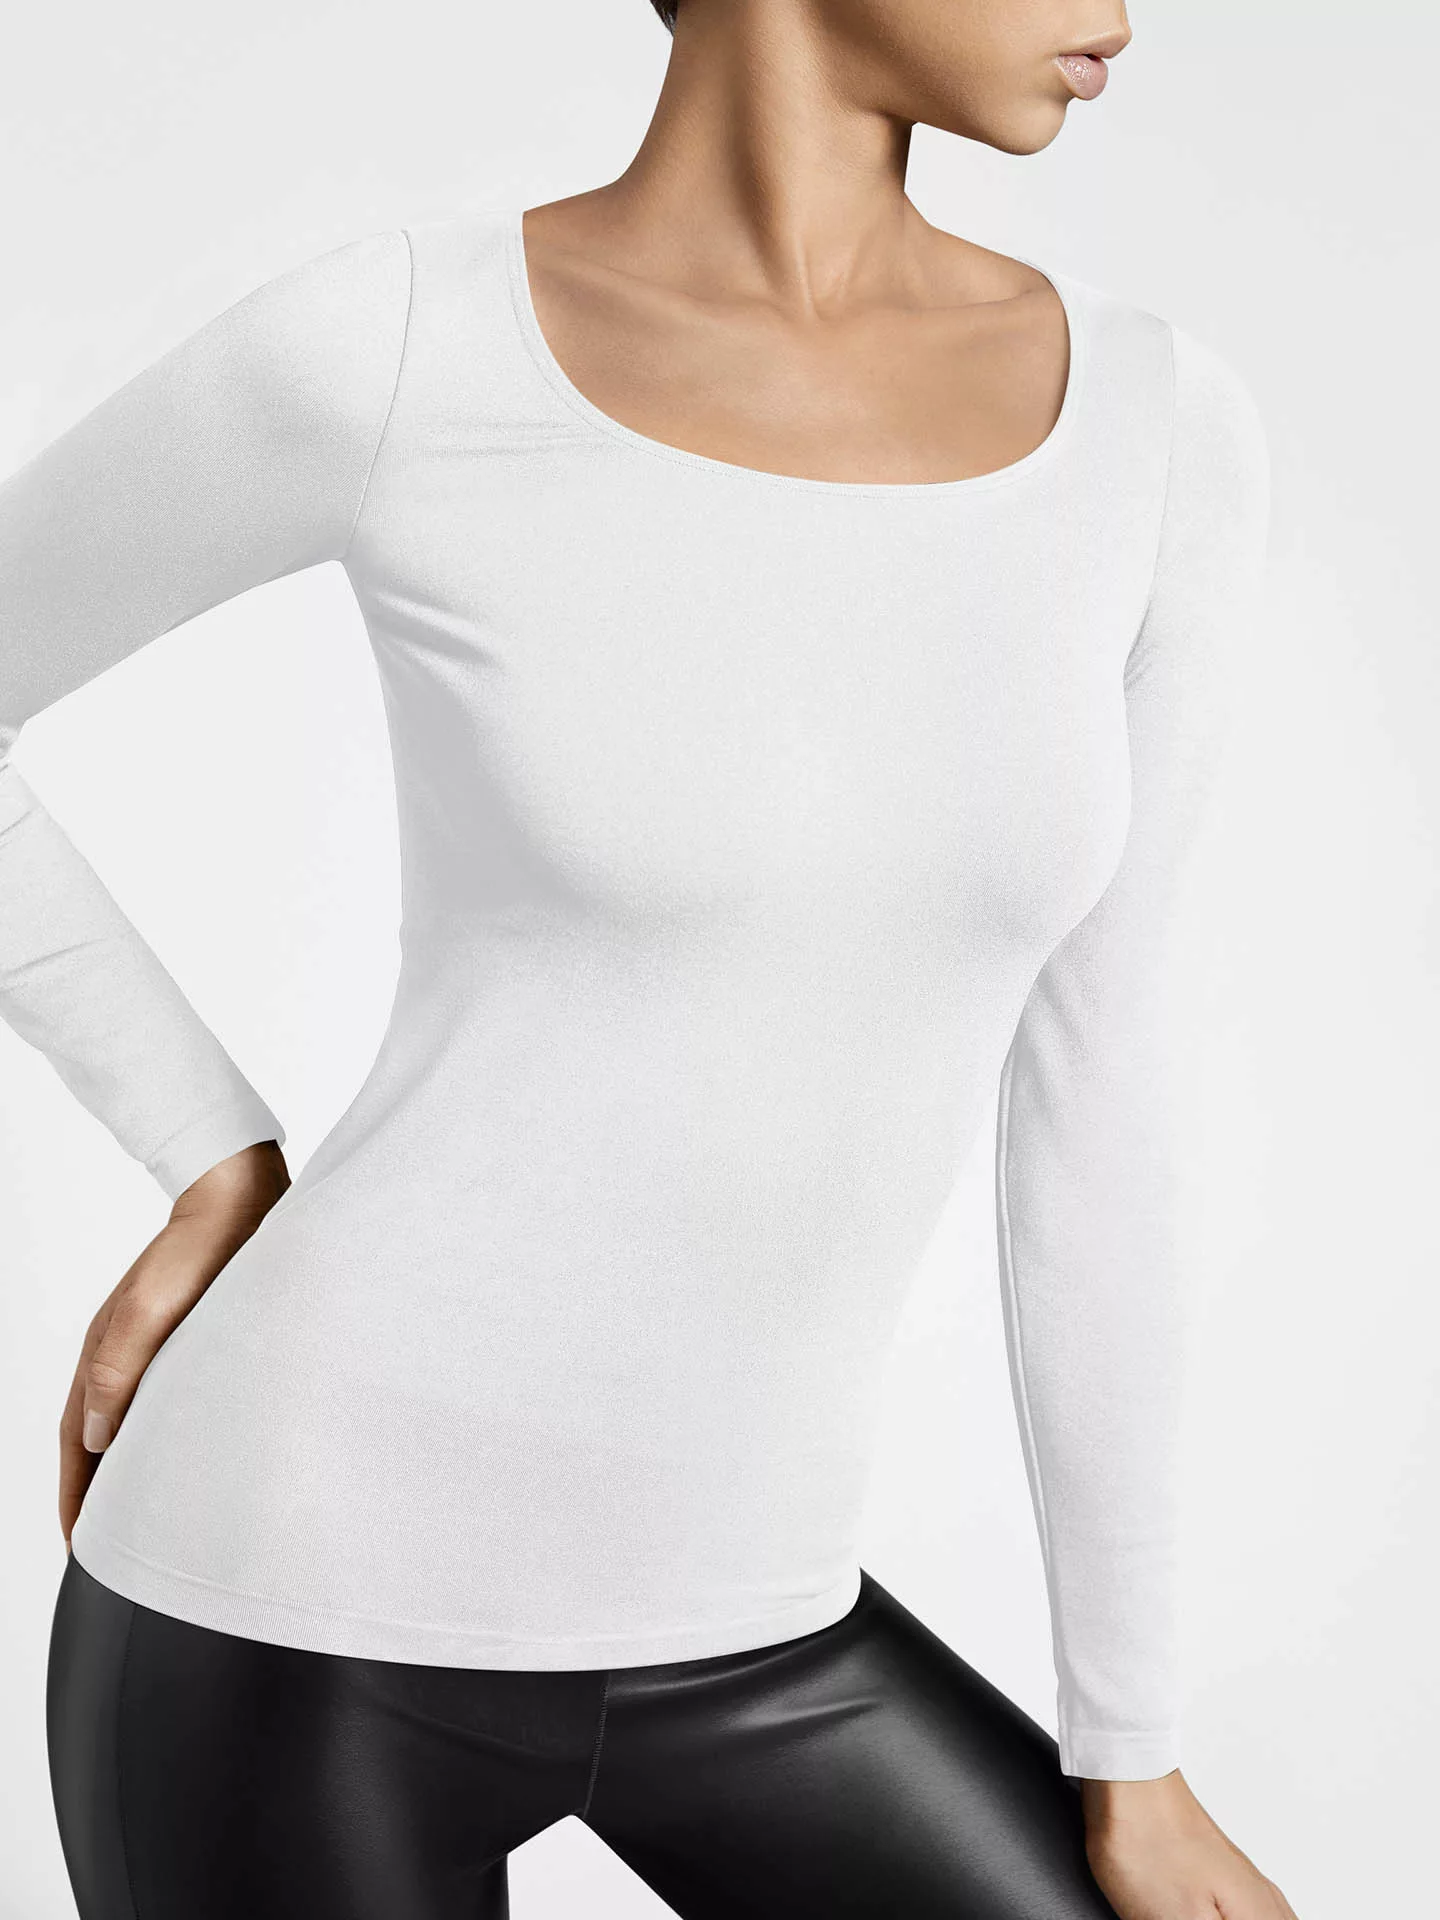 Wolford - Top Long Sleeves, Frau, white, Größe: L günstig online kaufen